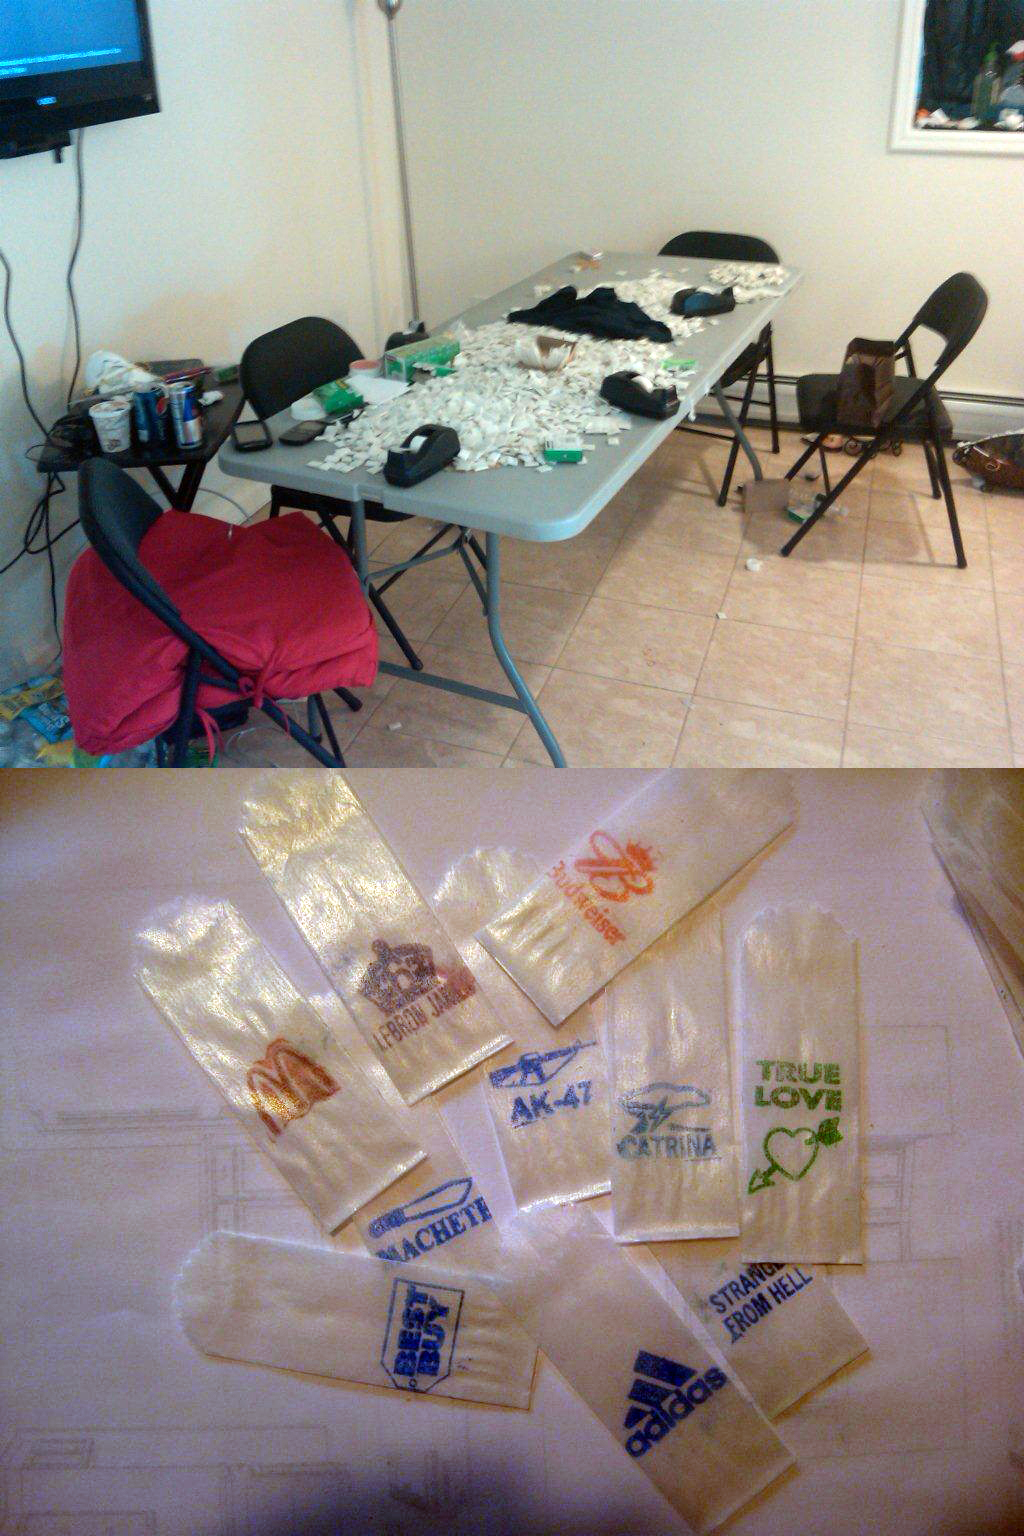 An alleged heroin packaging operation - Fort Lee, NJ (credit: specnarc.org) 